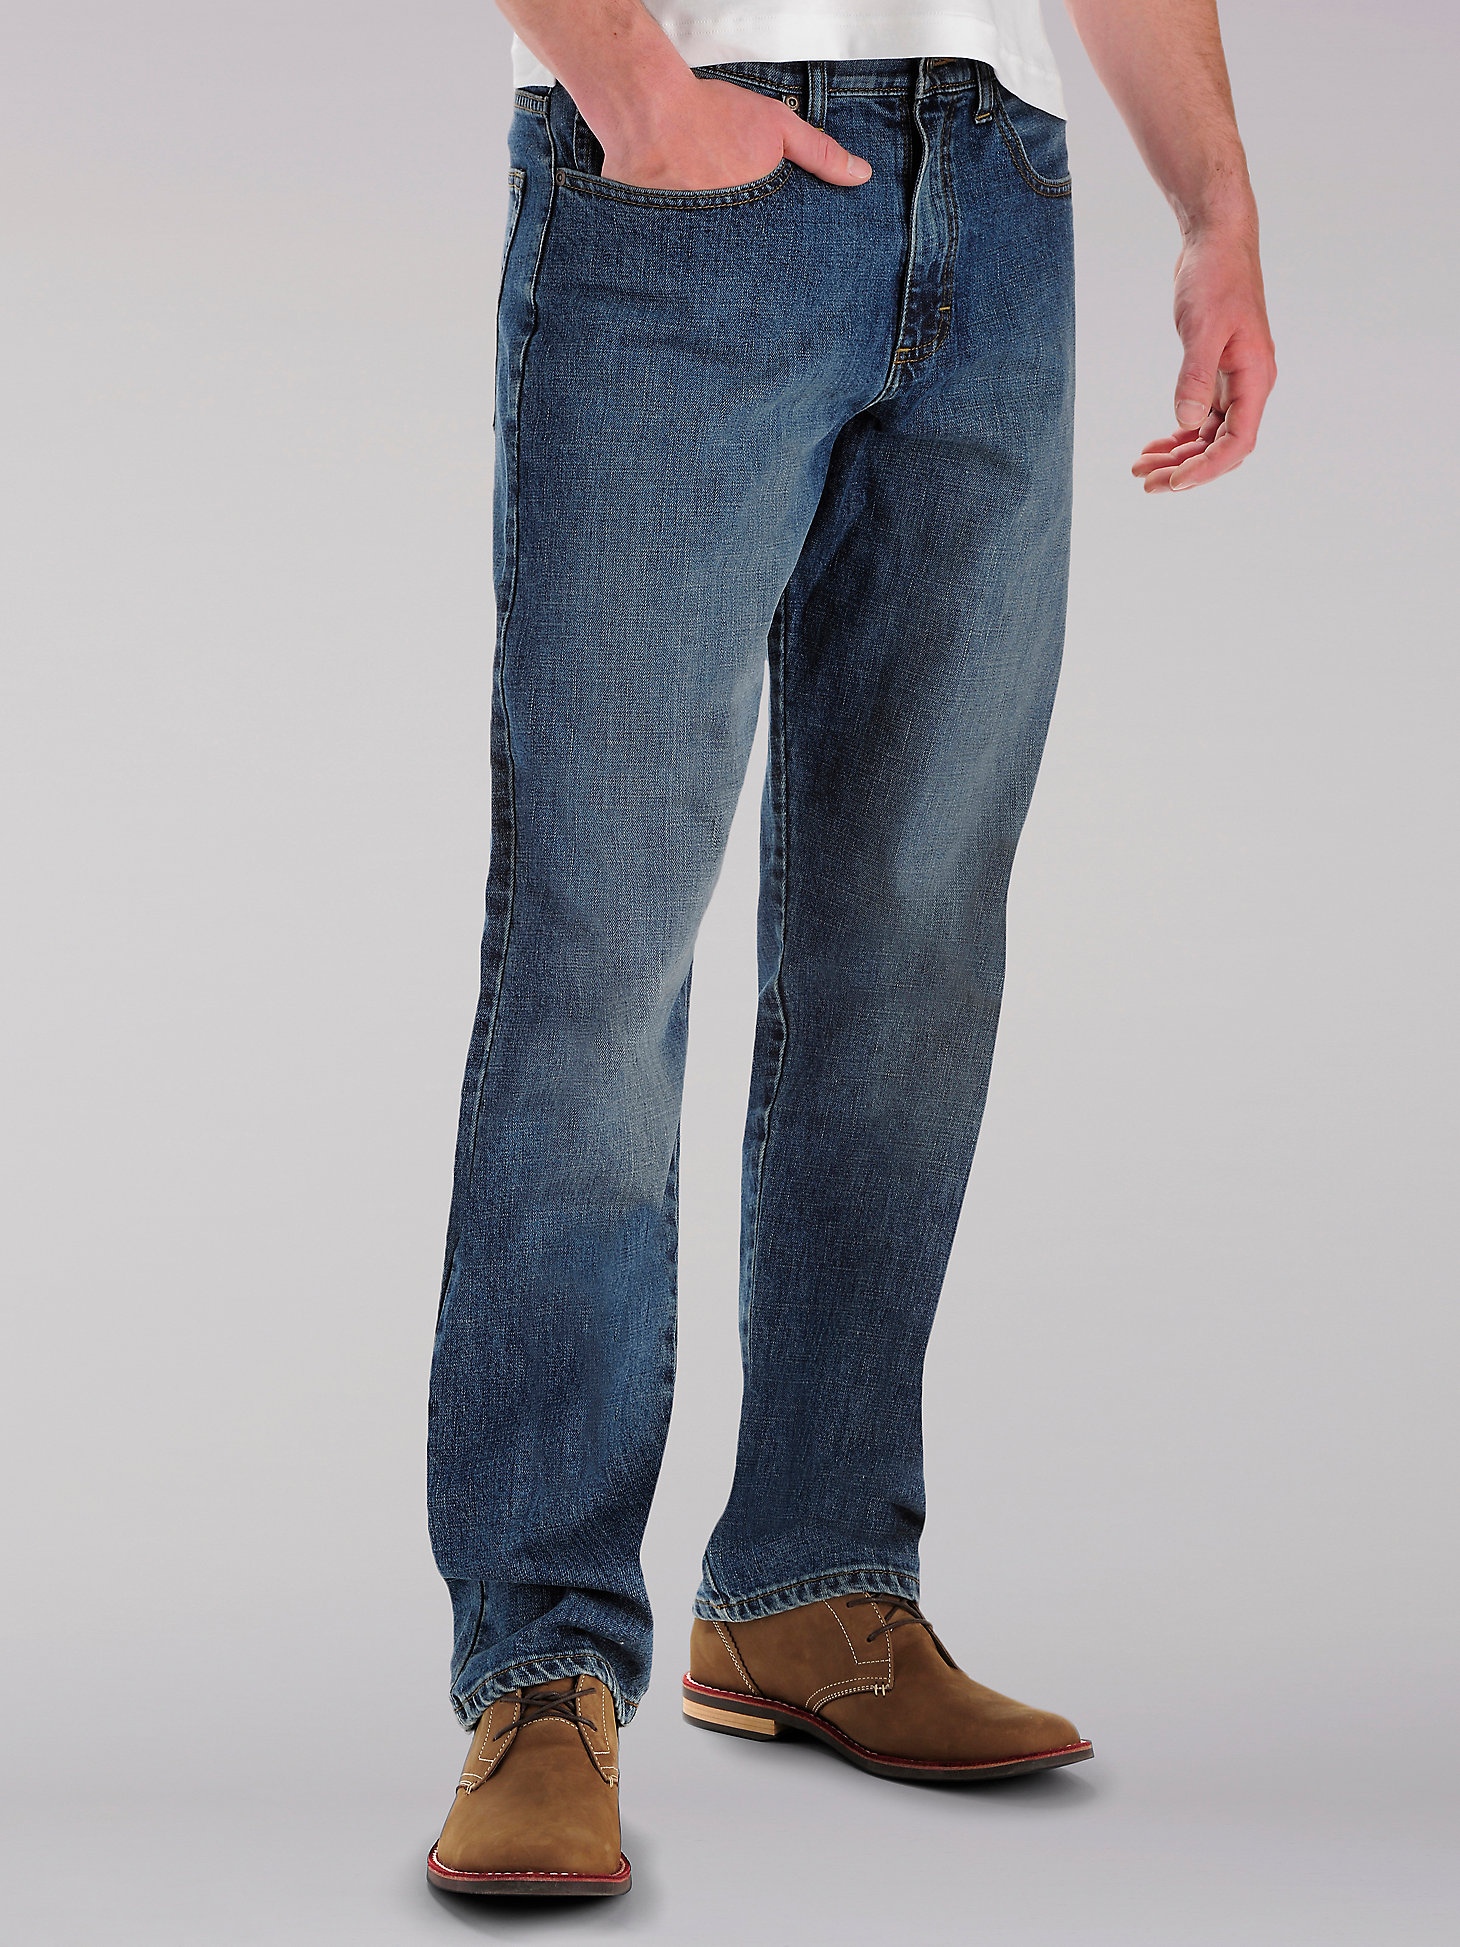 Men’s Custom Fit Loose Straight Leg Jean (Big&Tall) in Drifter main view